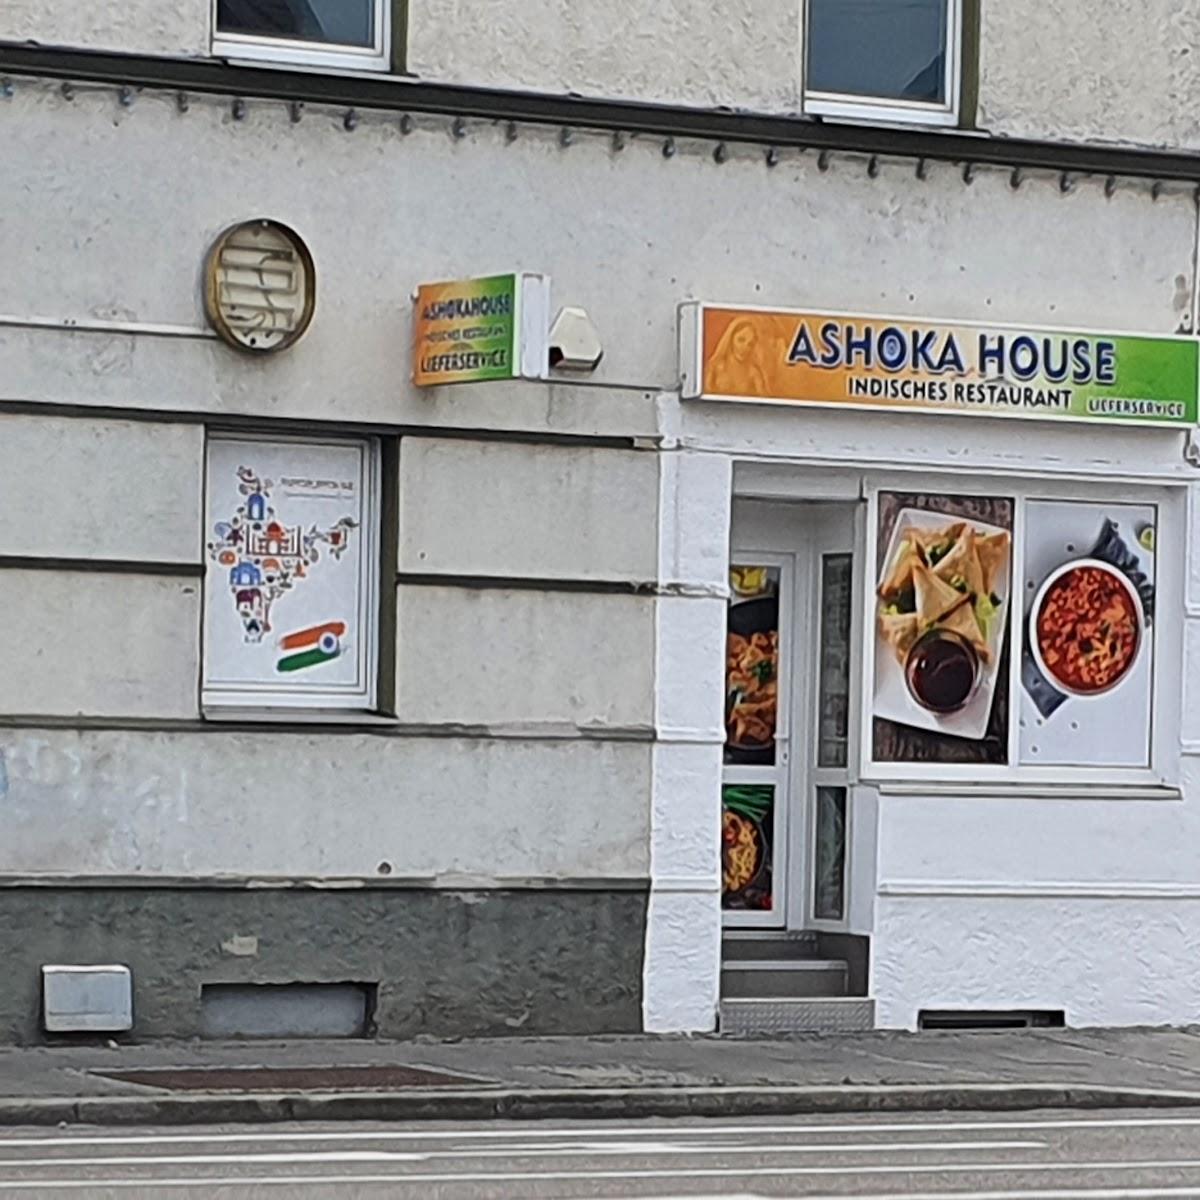 Restaurant "Ashokahouse 2" in Augsburg